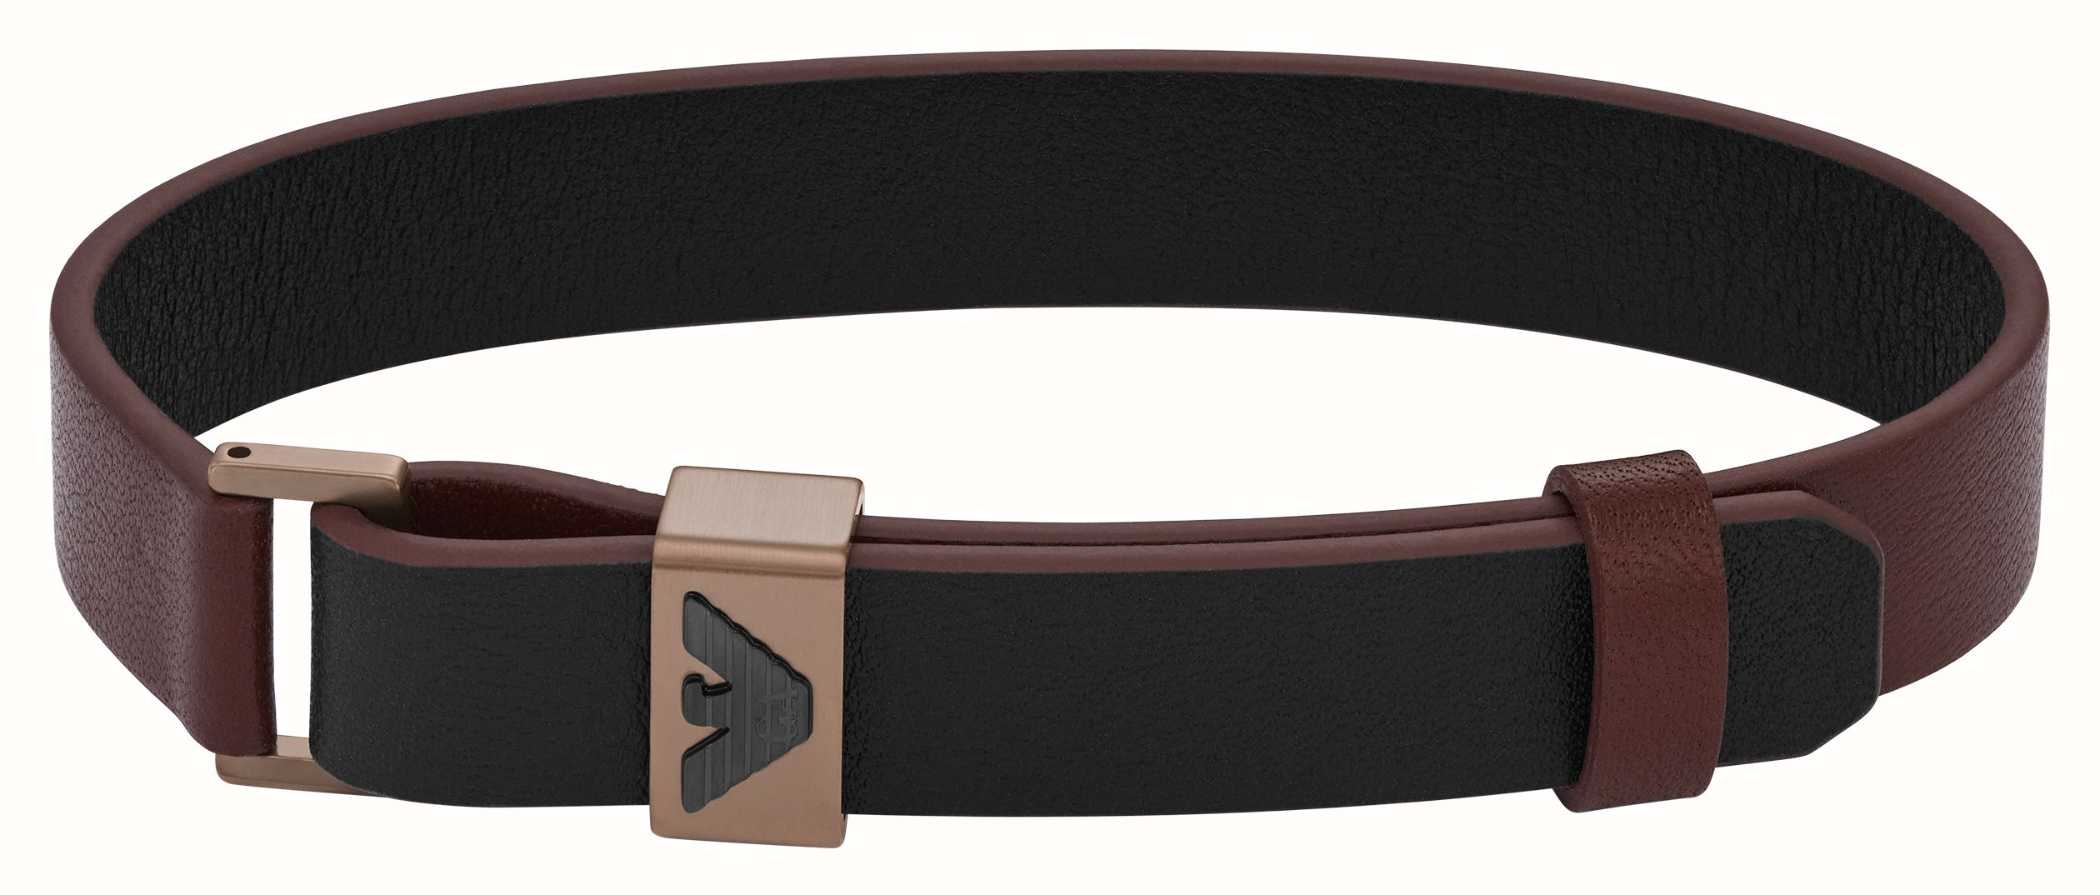 Emporio Armani Men's Bracelet | Brown Leather | Stainless Steel